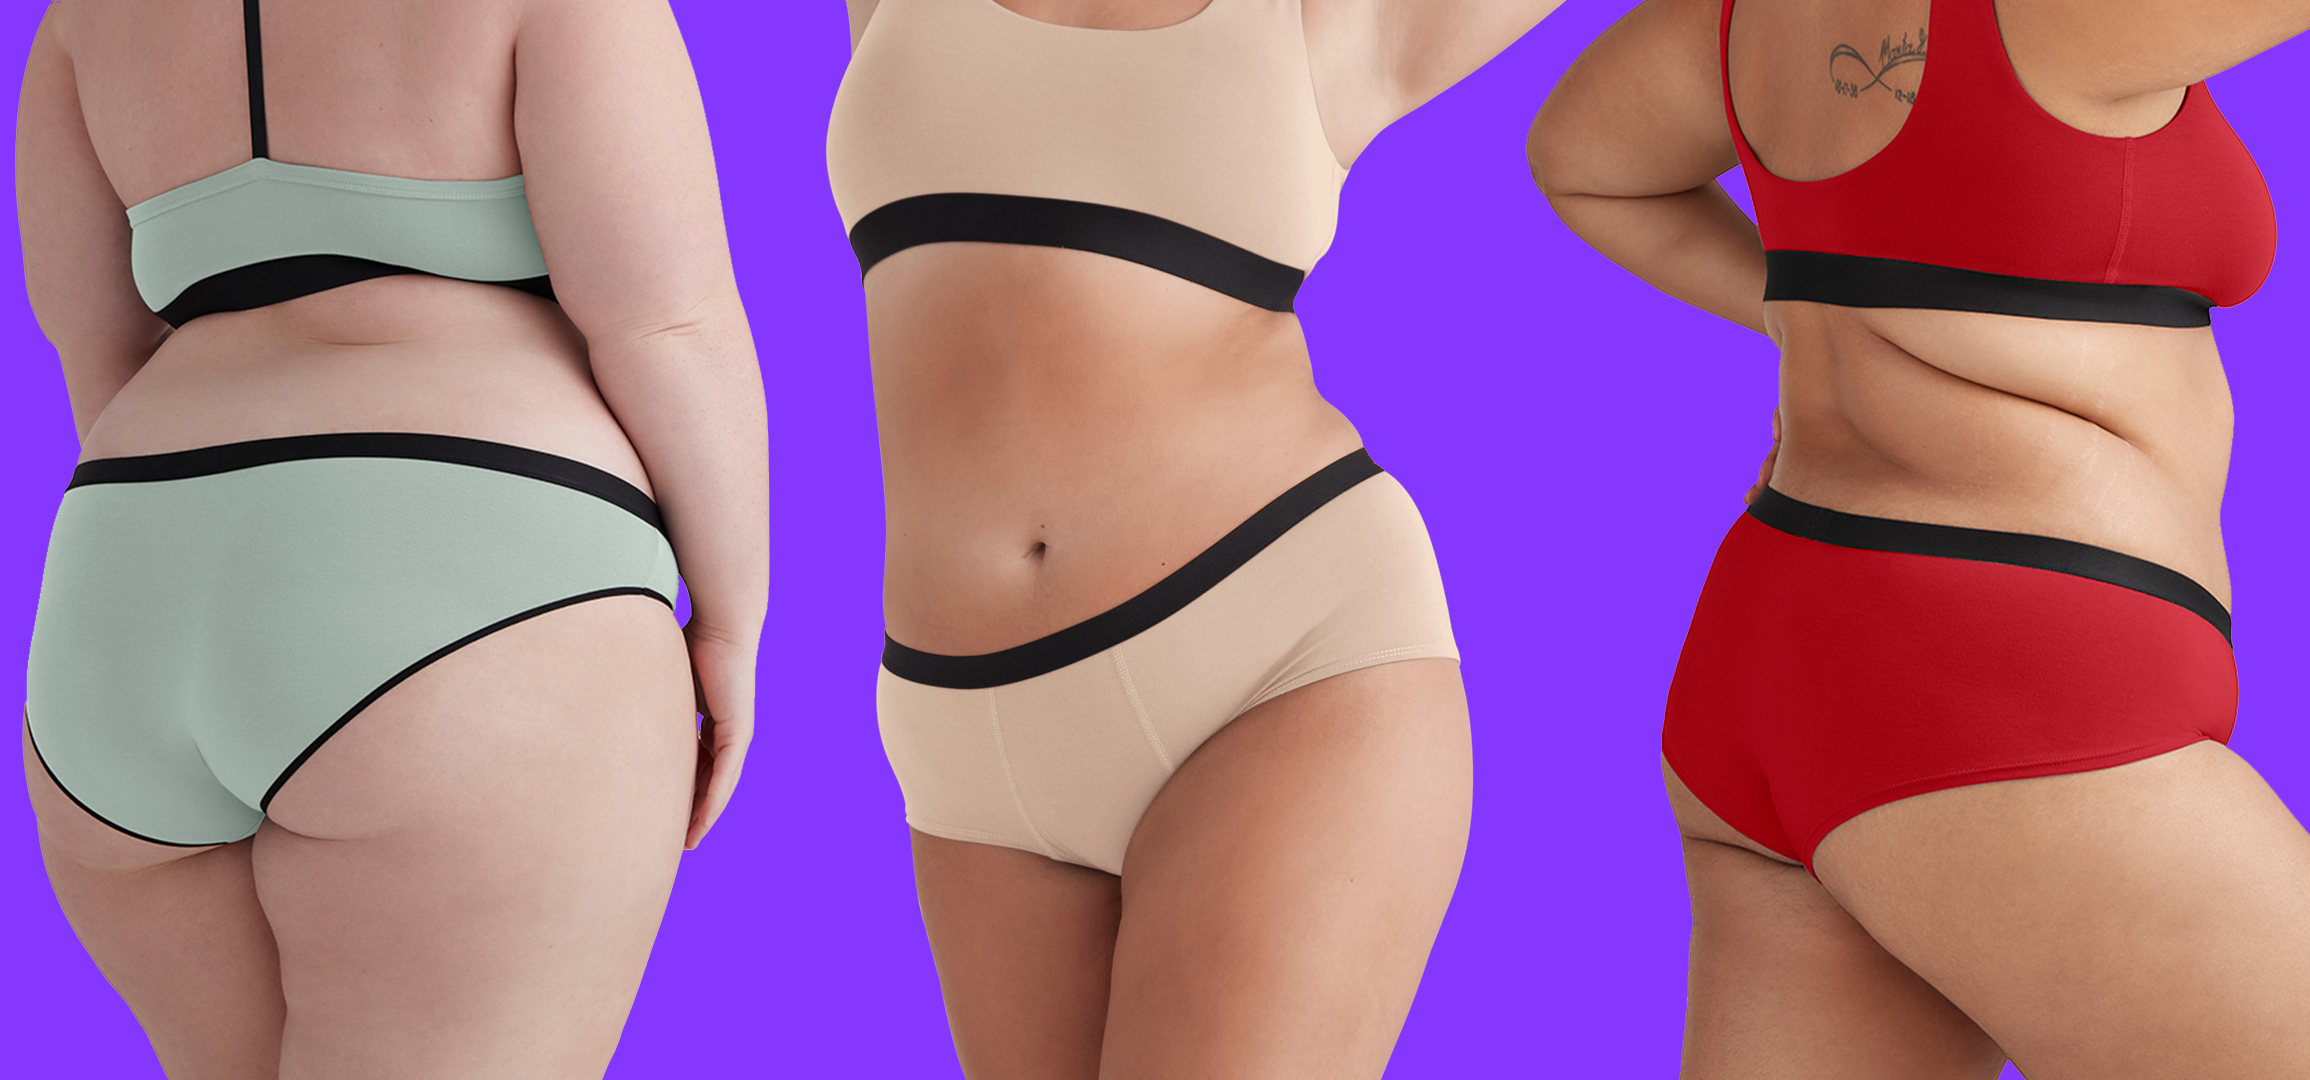 7 Essential Types of Underwear Styles for Women - Different Underwear Types  For Women & When To Wear Them